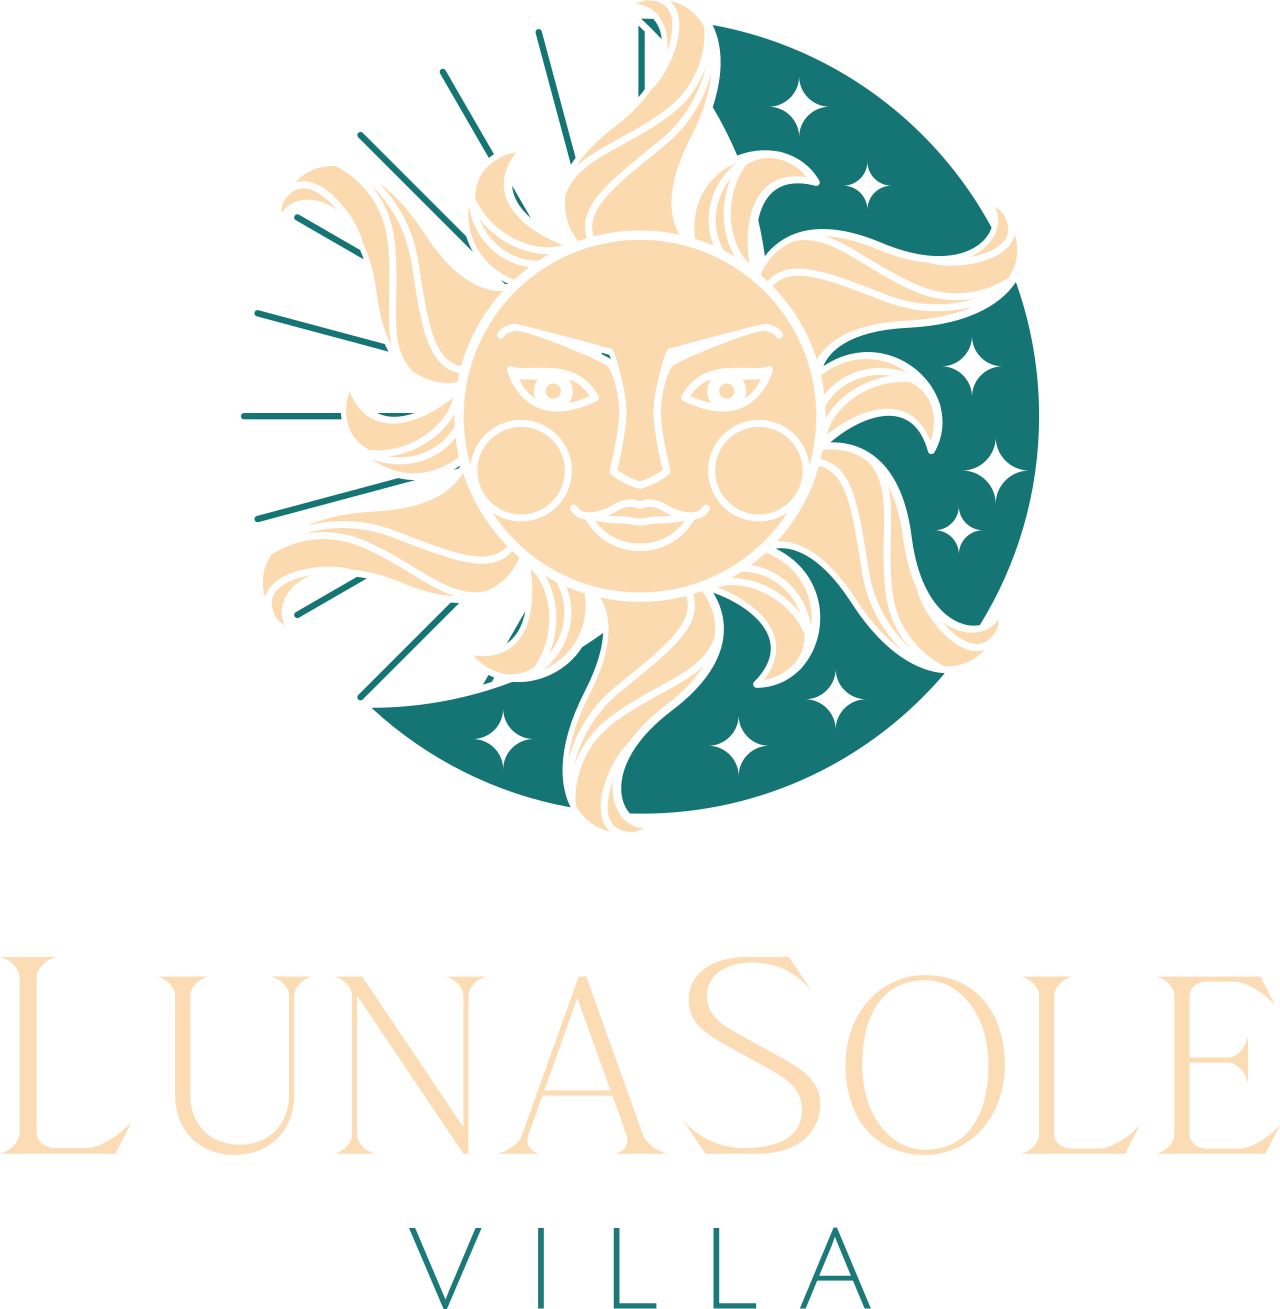 LunaSole's logo